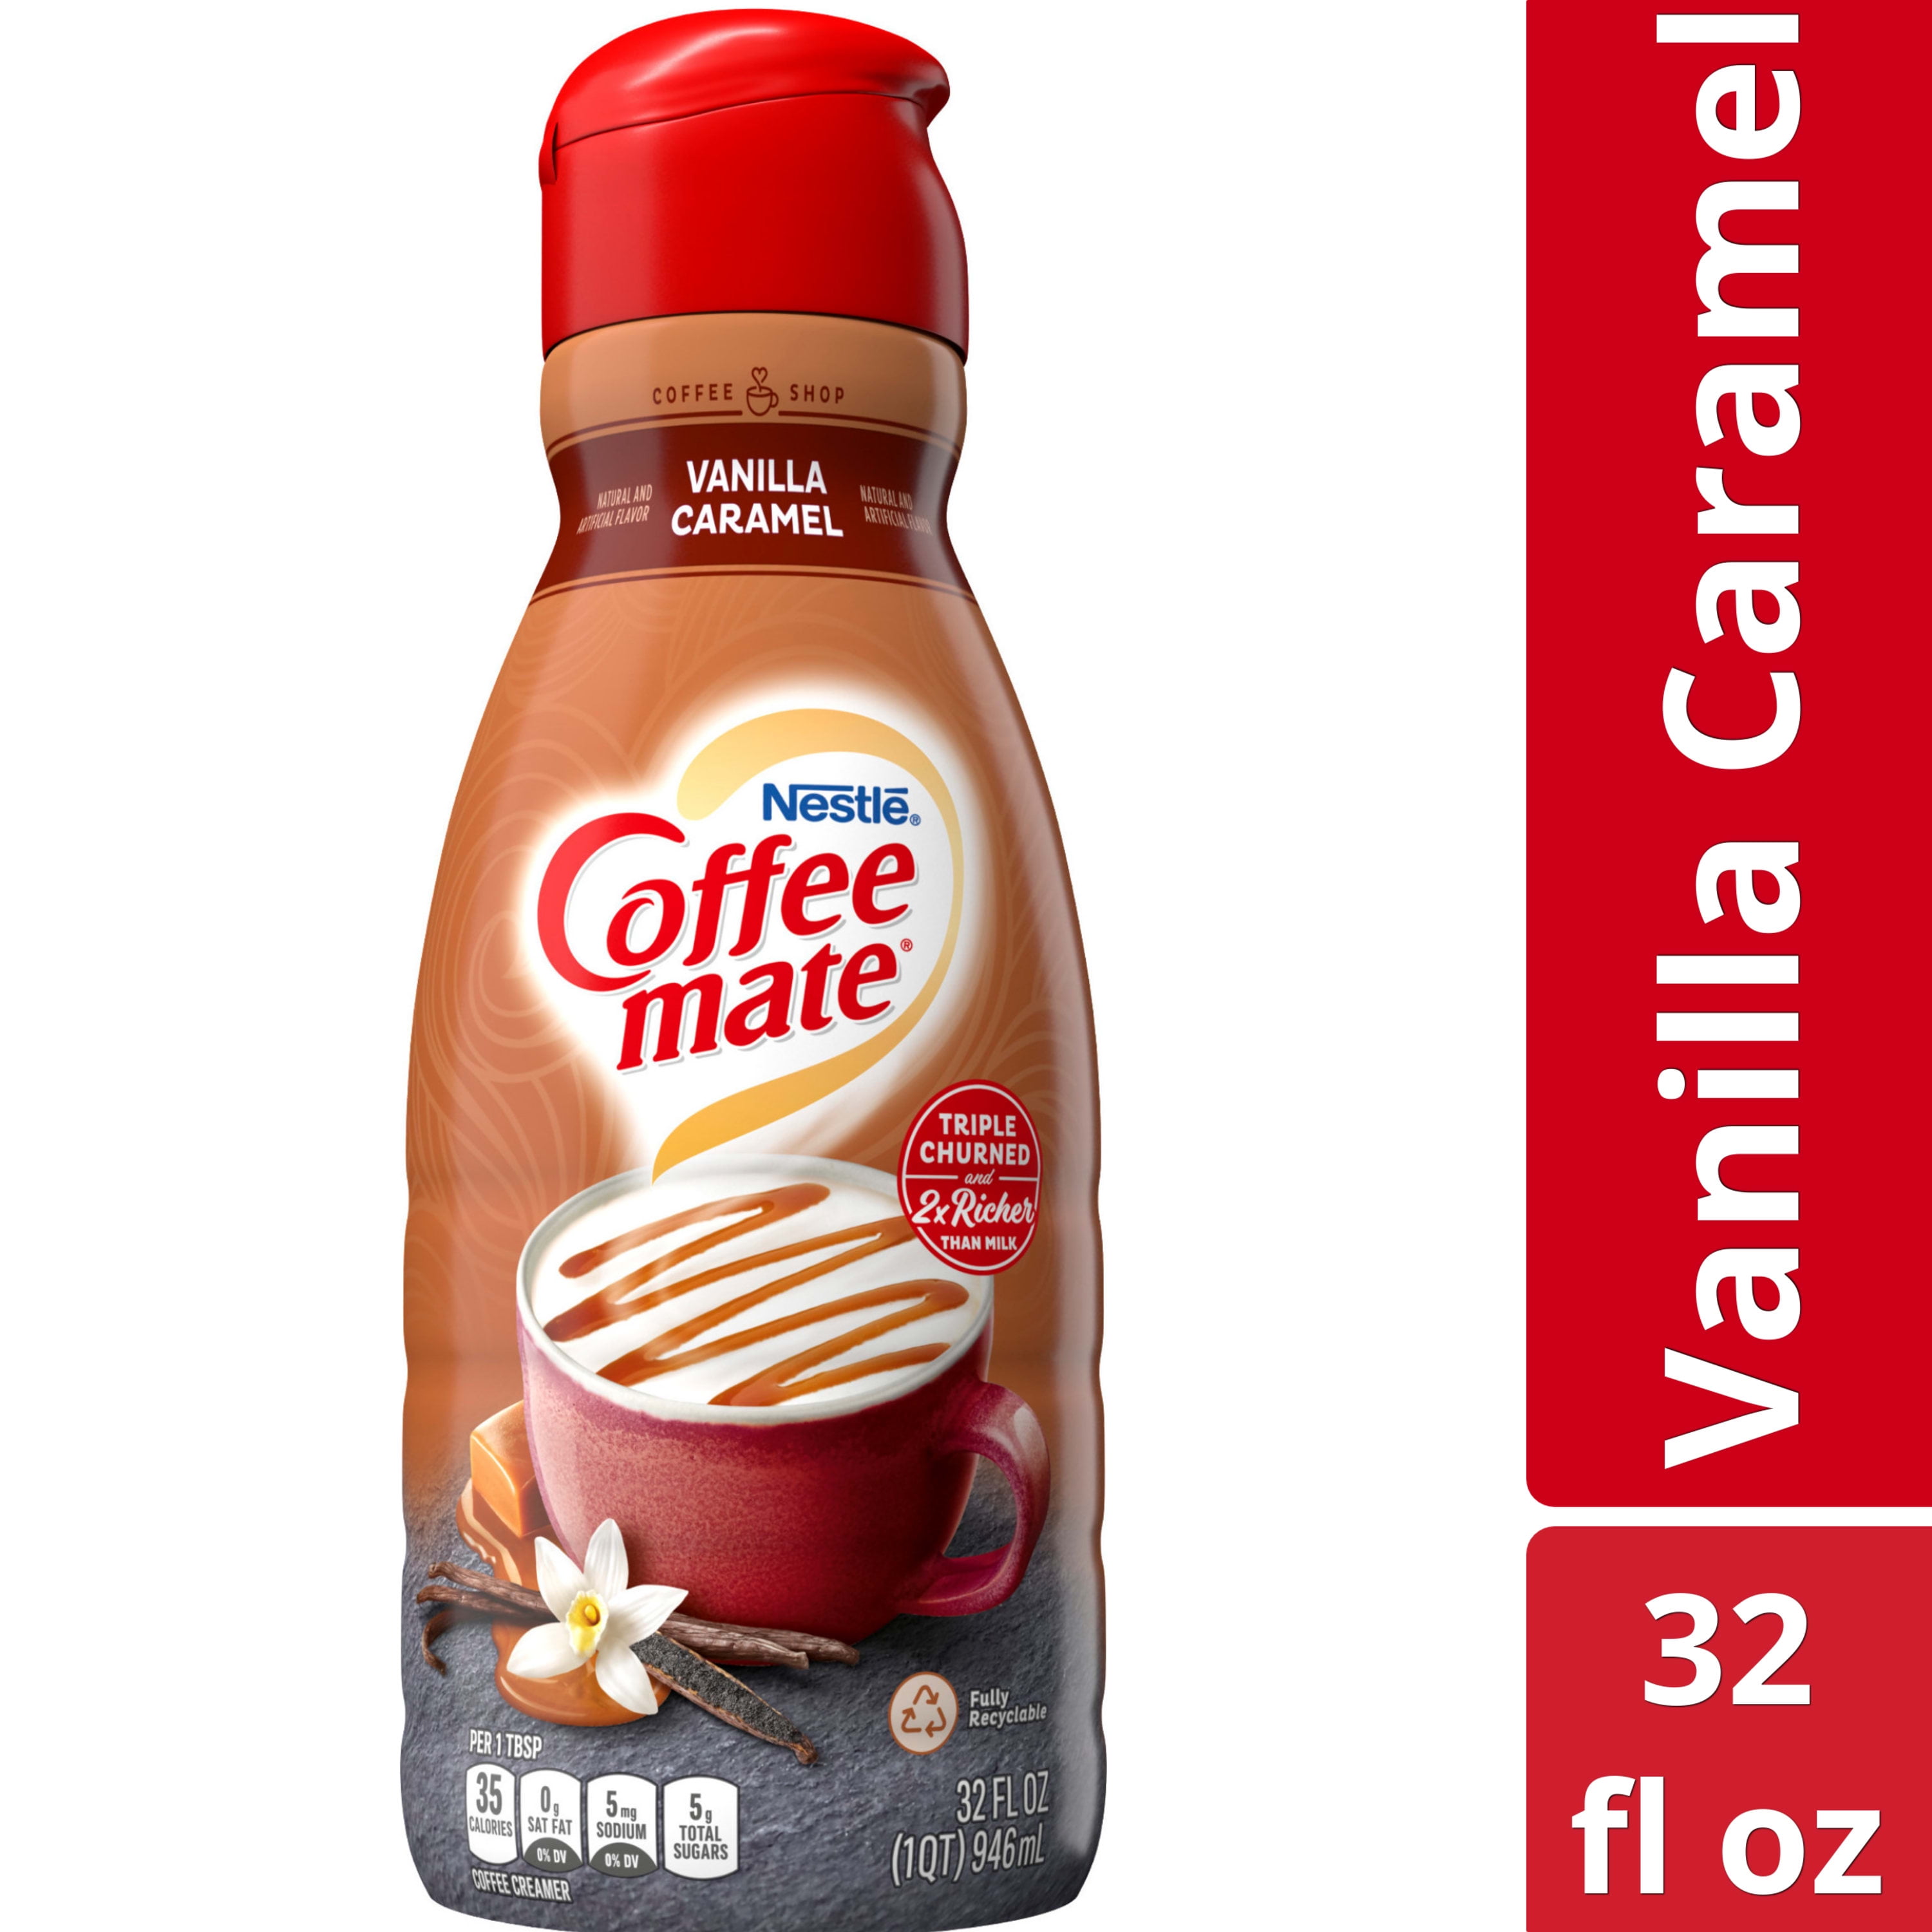 Coffee, Tea & Accessories; Creamer Type: Liquid; Container Size: 0.38 oz;  Container Type: Mini Cups; Flavor: Caramel Chocolate